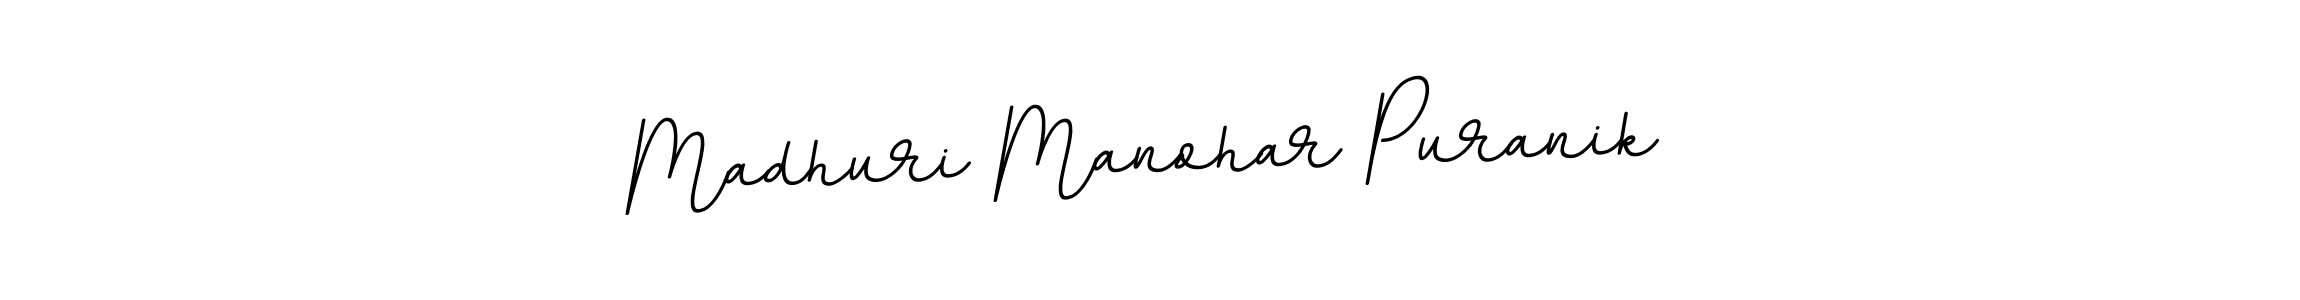 Best and Professional Signature Style for Madhuri Manohar Puranik. BallpointsItalic-DORy9 Best Signature Style Collection. Madhuri Manohar Puranik signature style 11 images and pictures png